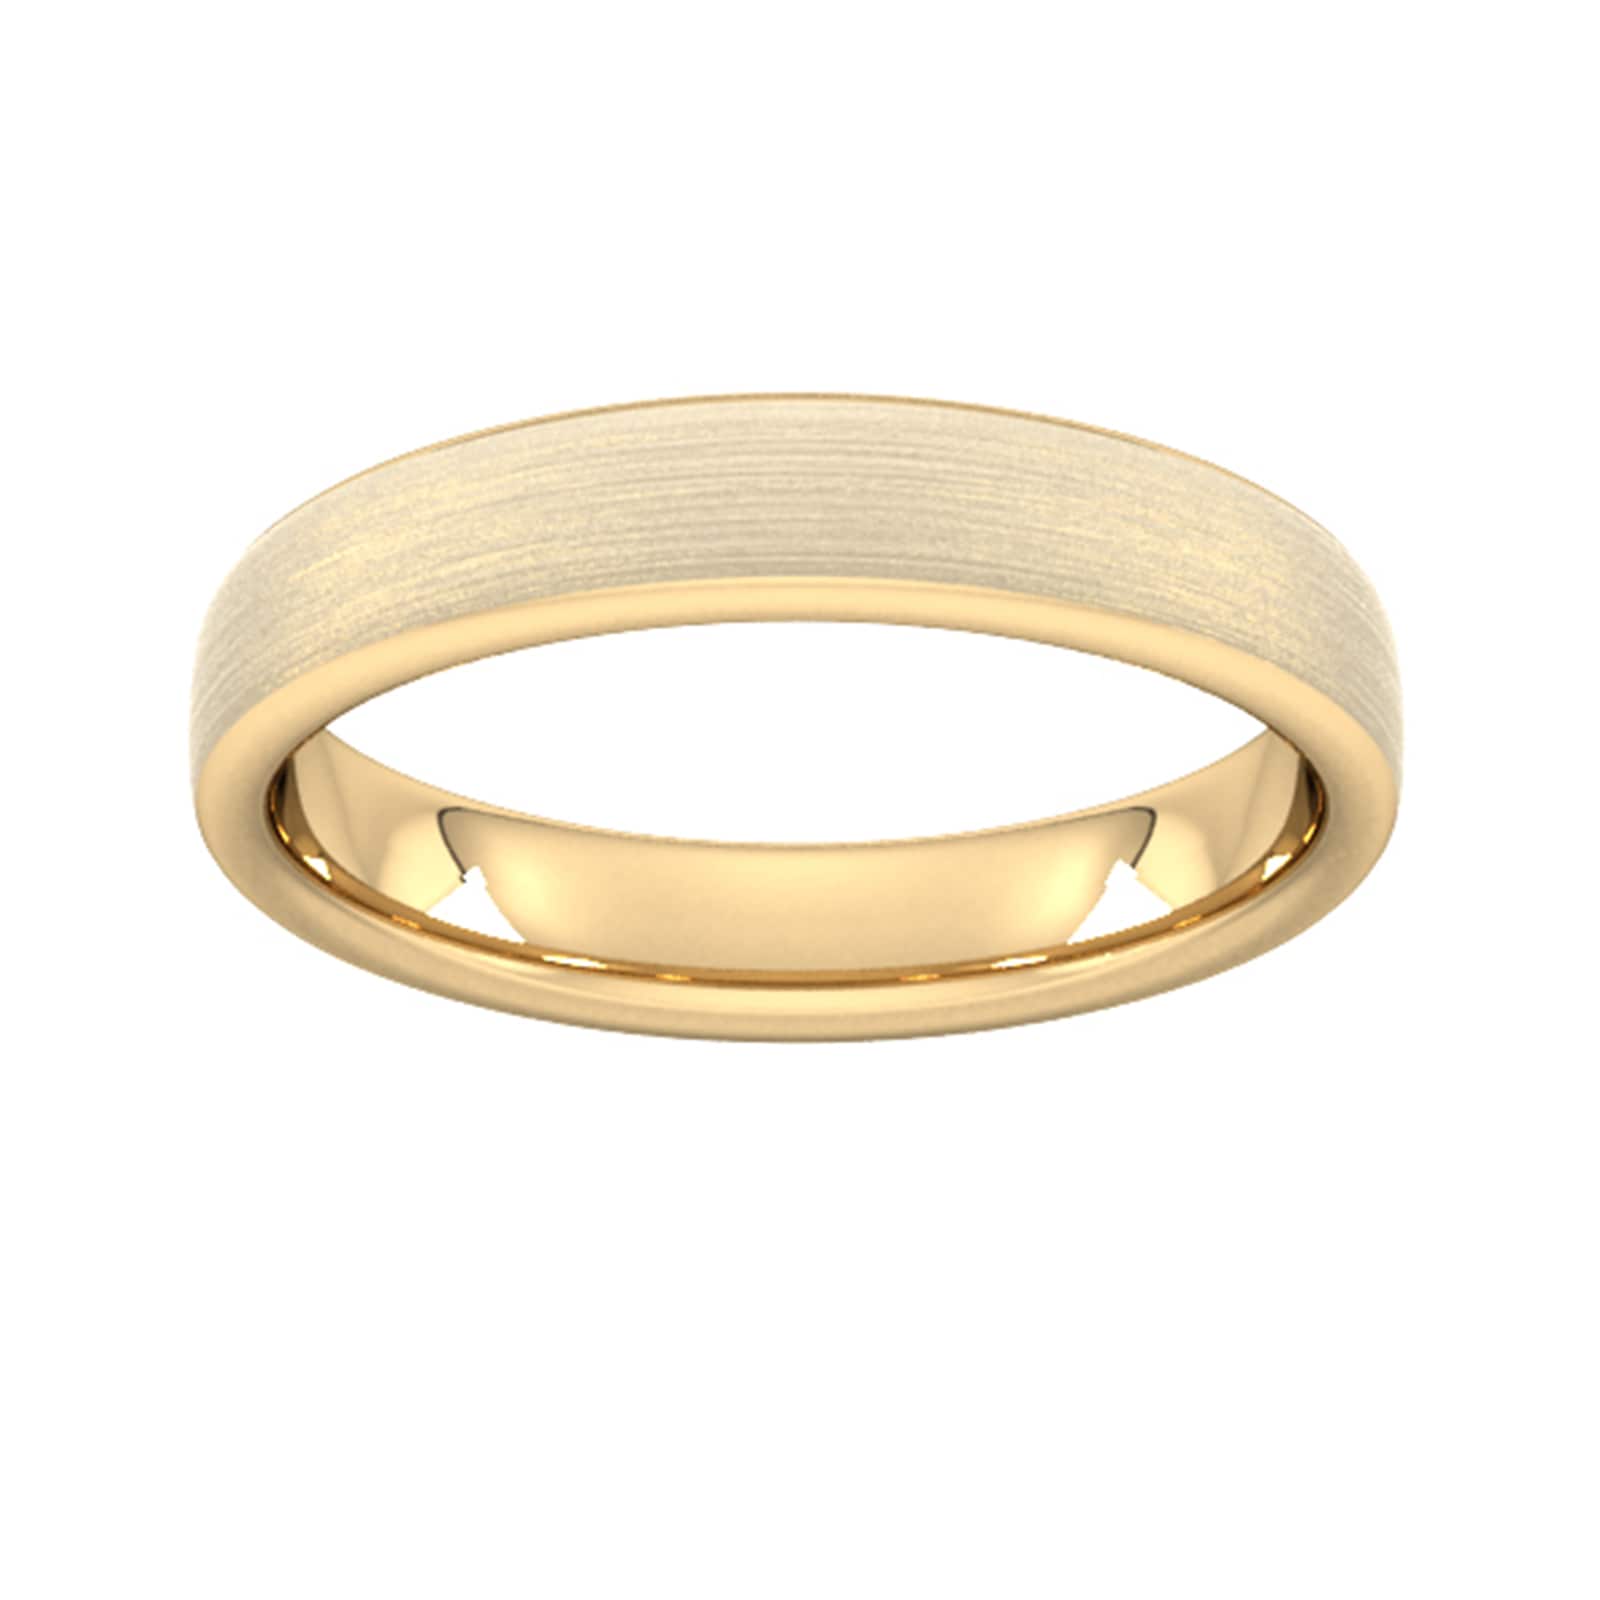 4mm D Shape Heavy Matt Finished Wedding Ring In 18 Carat Yellow Gold - Ring Size Q